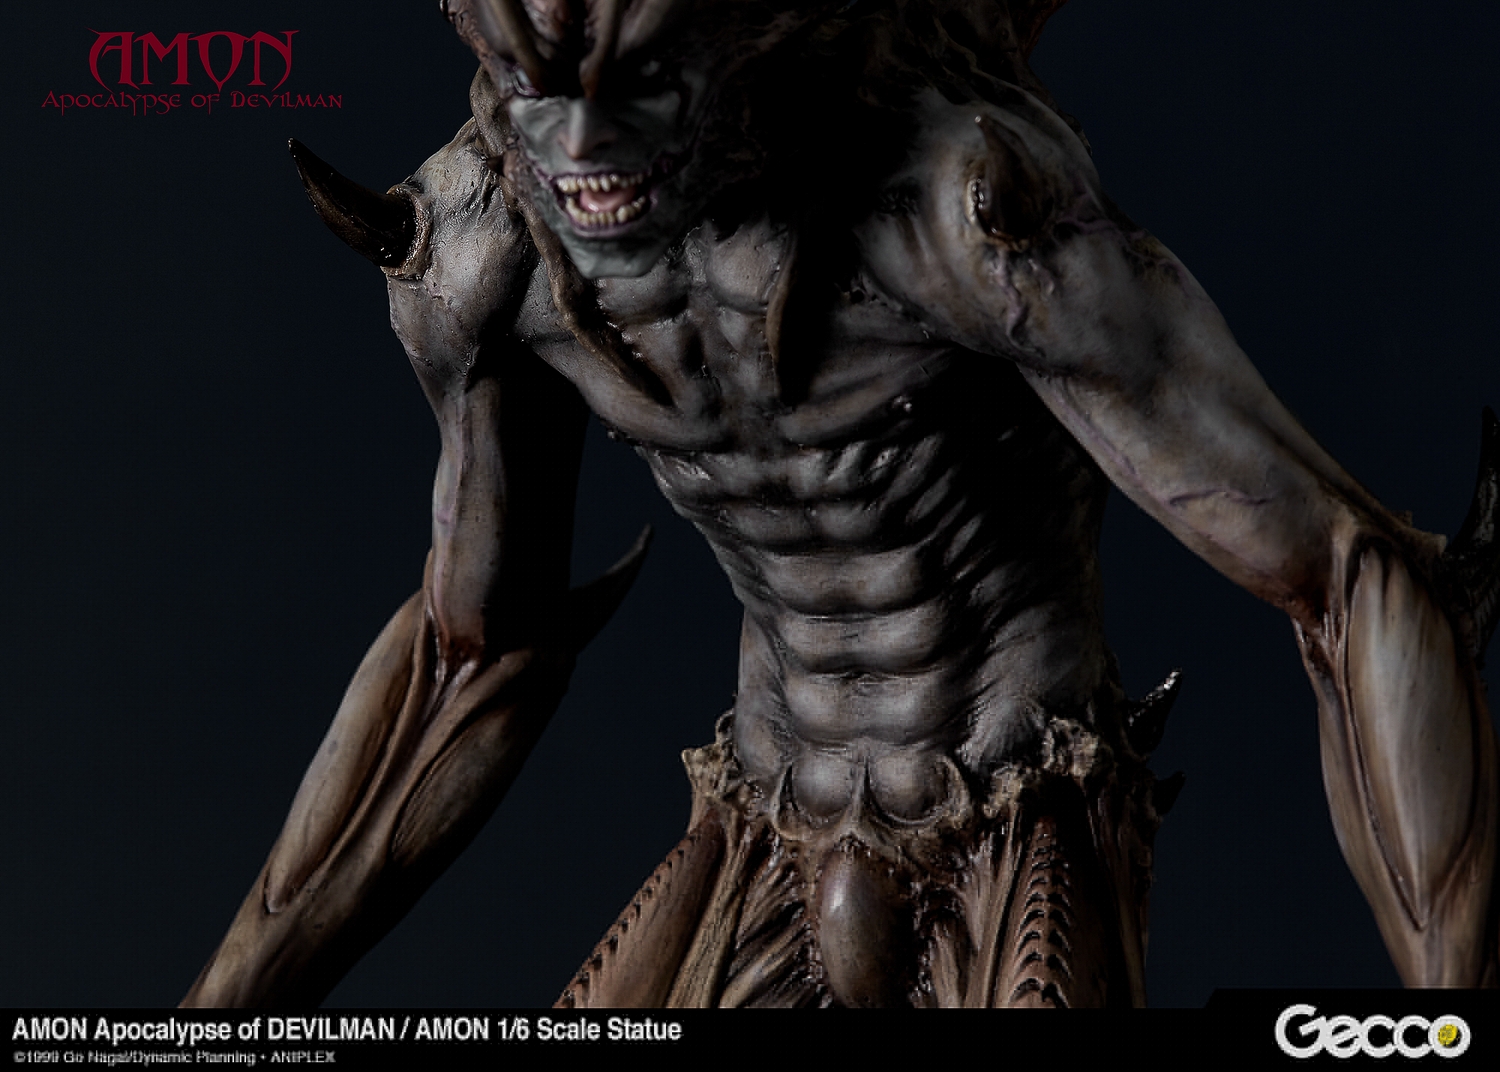 Gecco-Amon-Apocalypse-of-Devilman-Statue-019.jpg